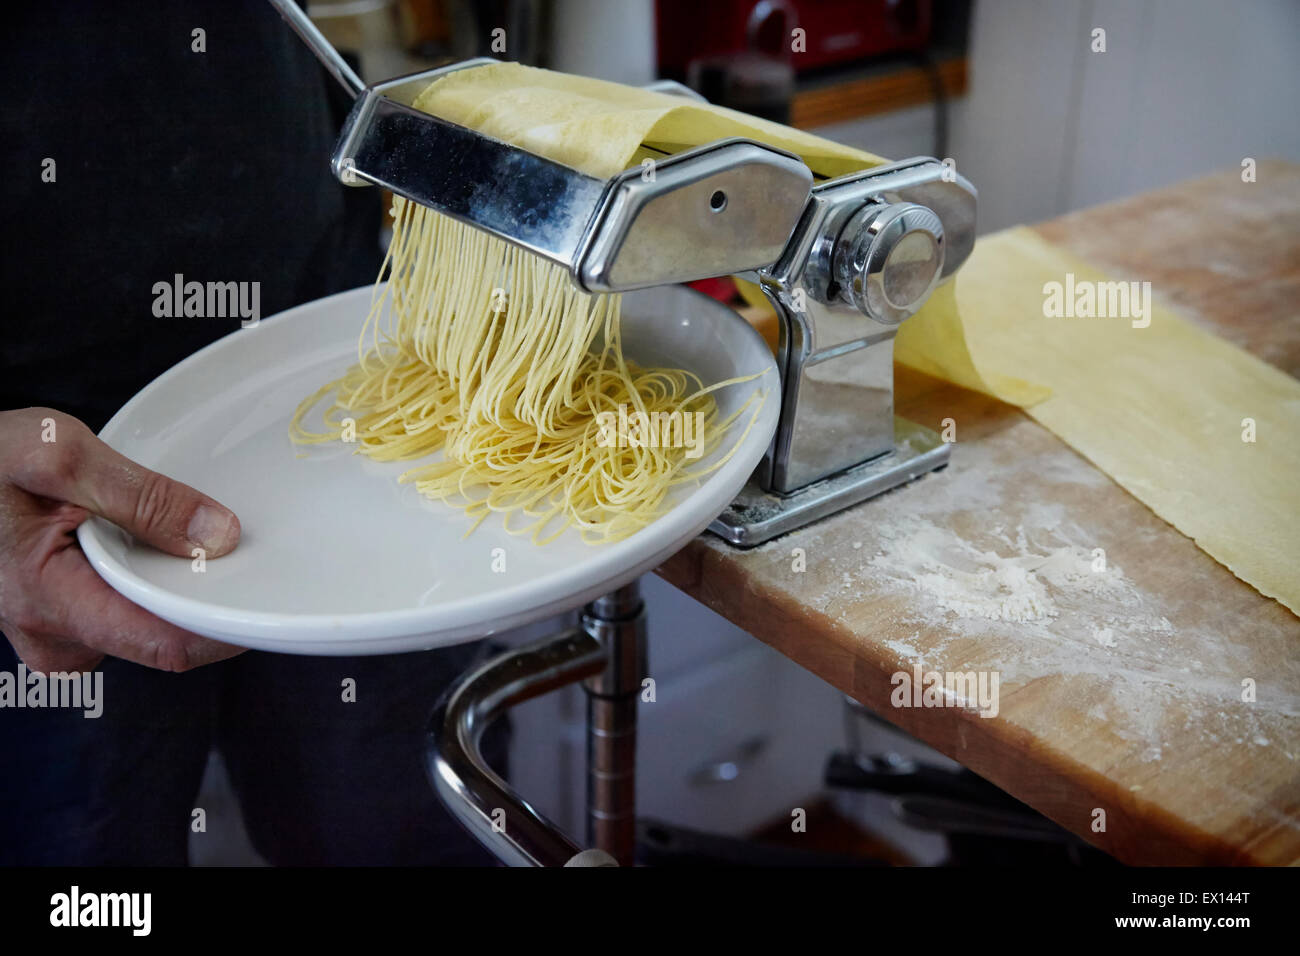 https://c8.alamy.com/comp/EX144T/making-homemade-pasta-with-pasta-machine-EX144T.jpg